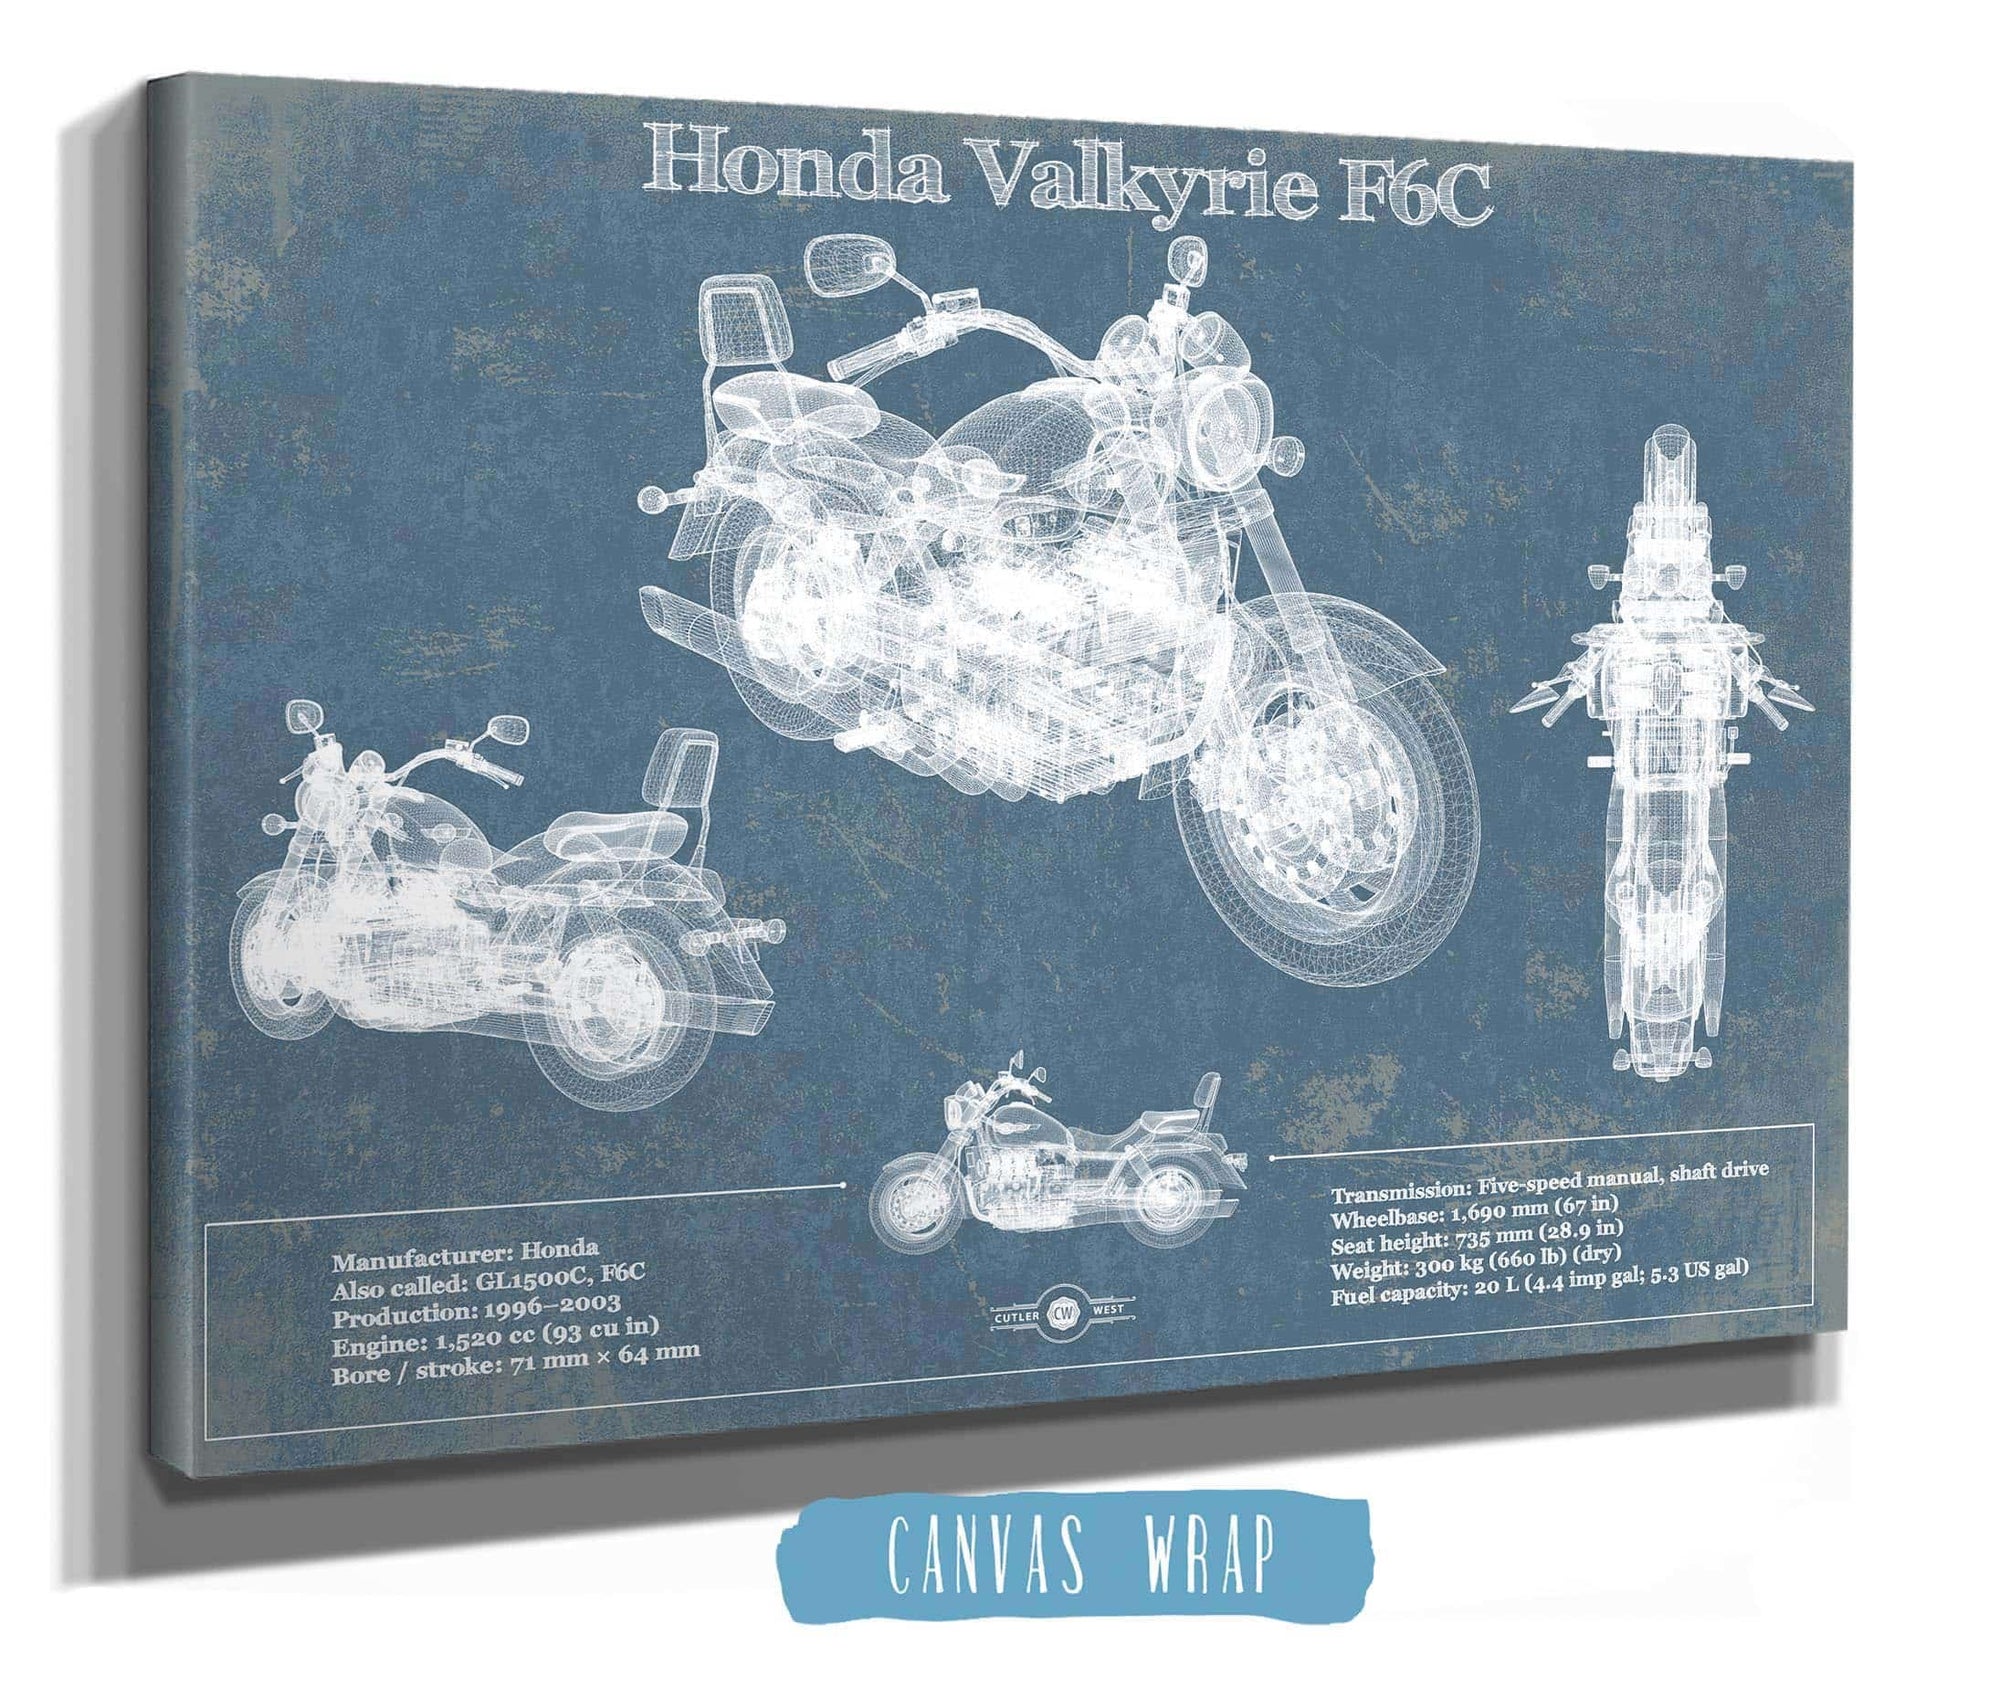 Cutler West Honda Valkyrie F6C Blueprint Motorcycle Patent Print